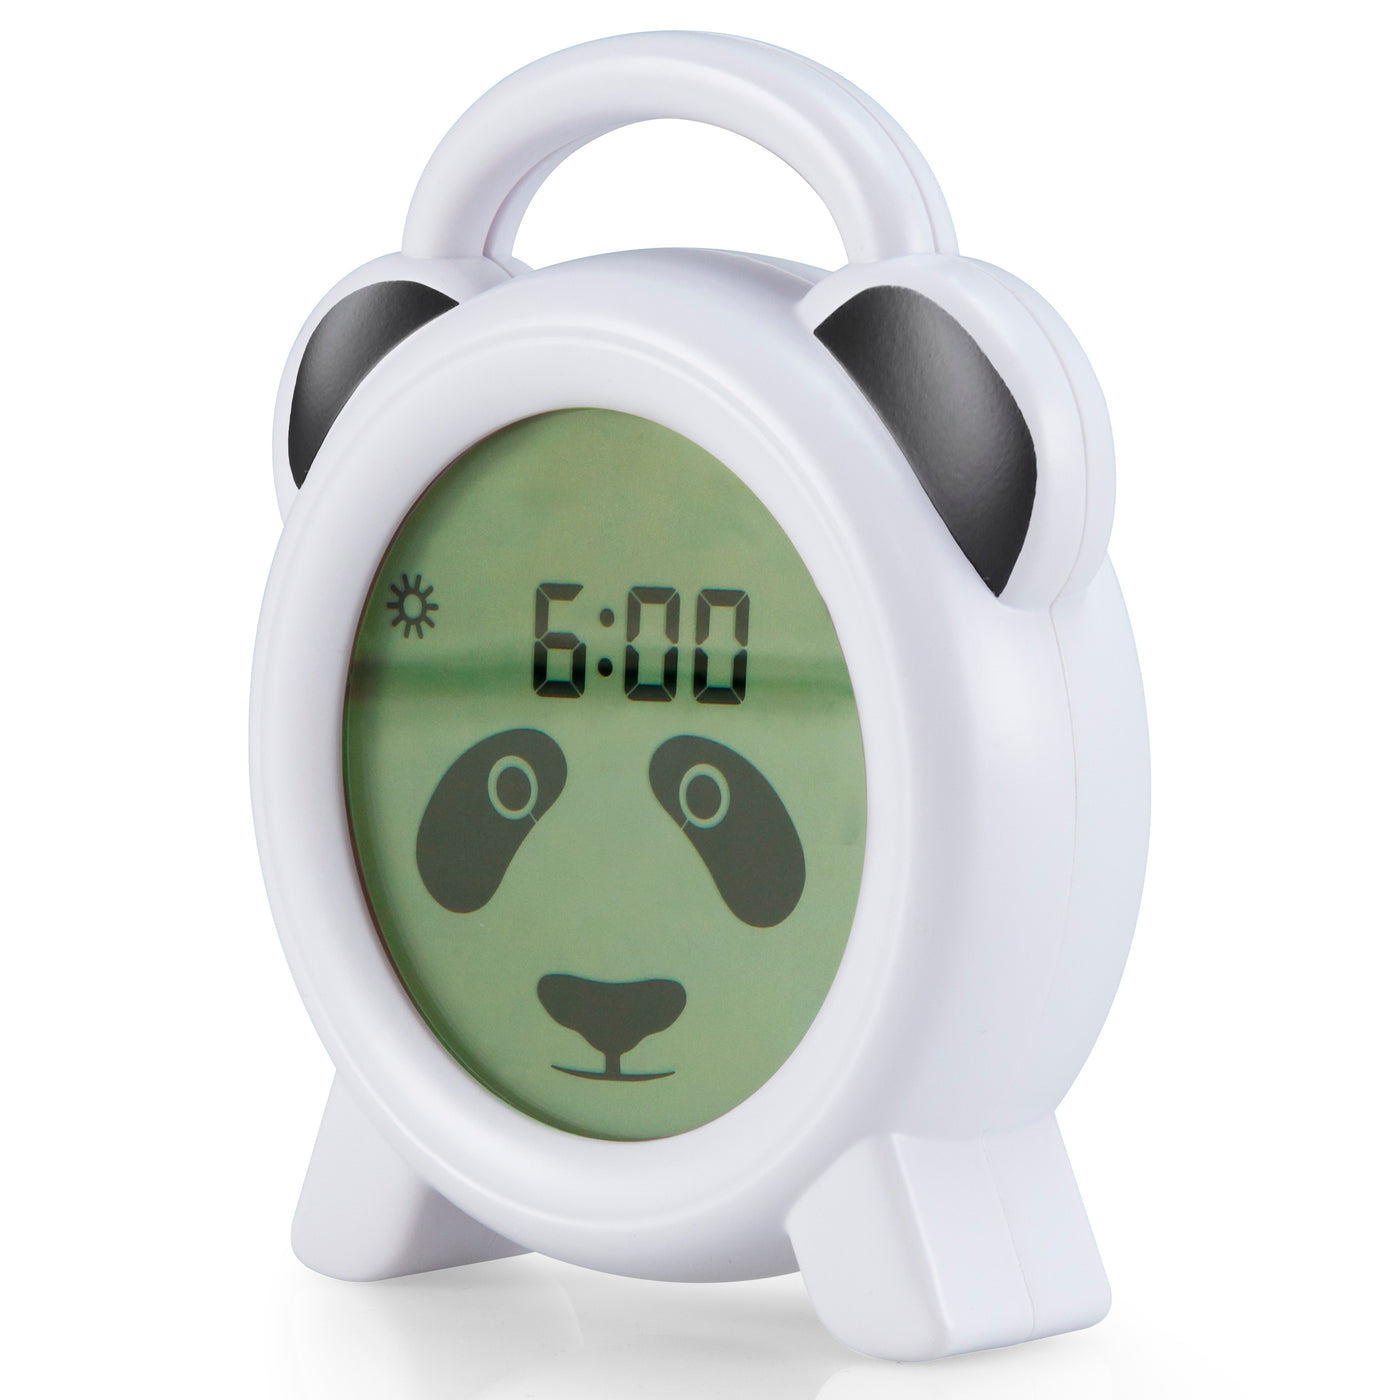 Alecto BC100PANDA - Sleep trainer, night light and alarm clock, panda